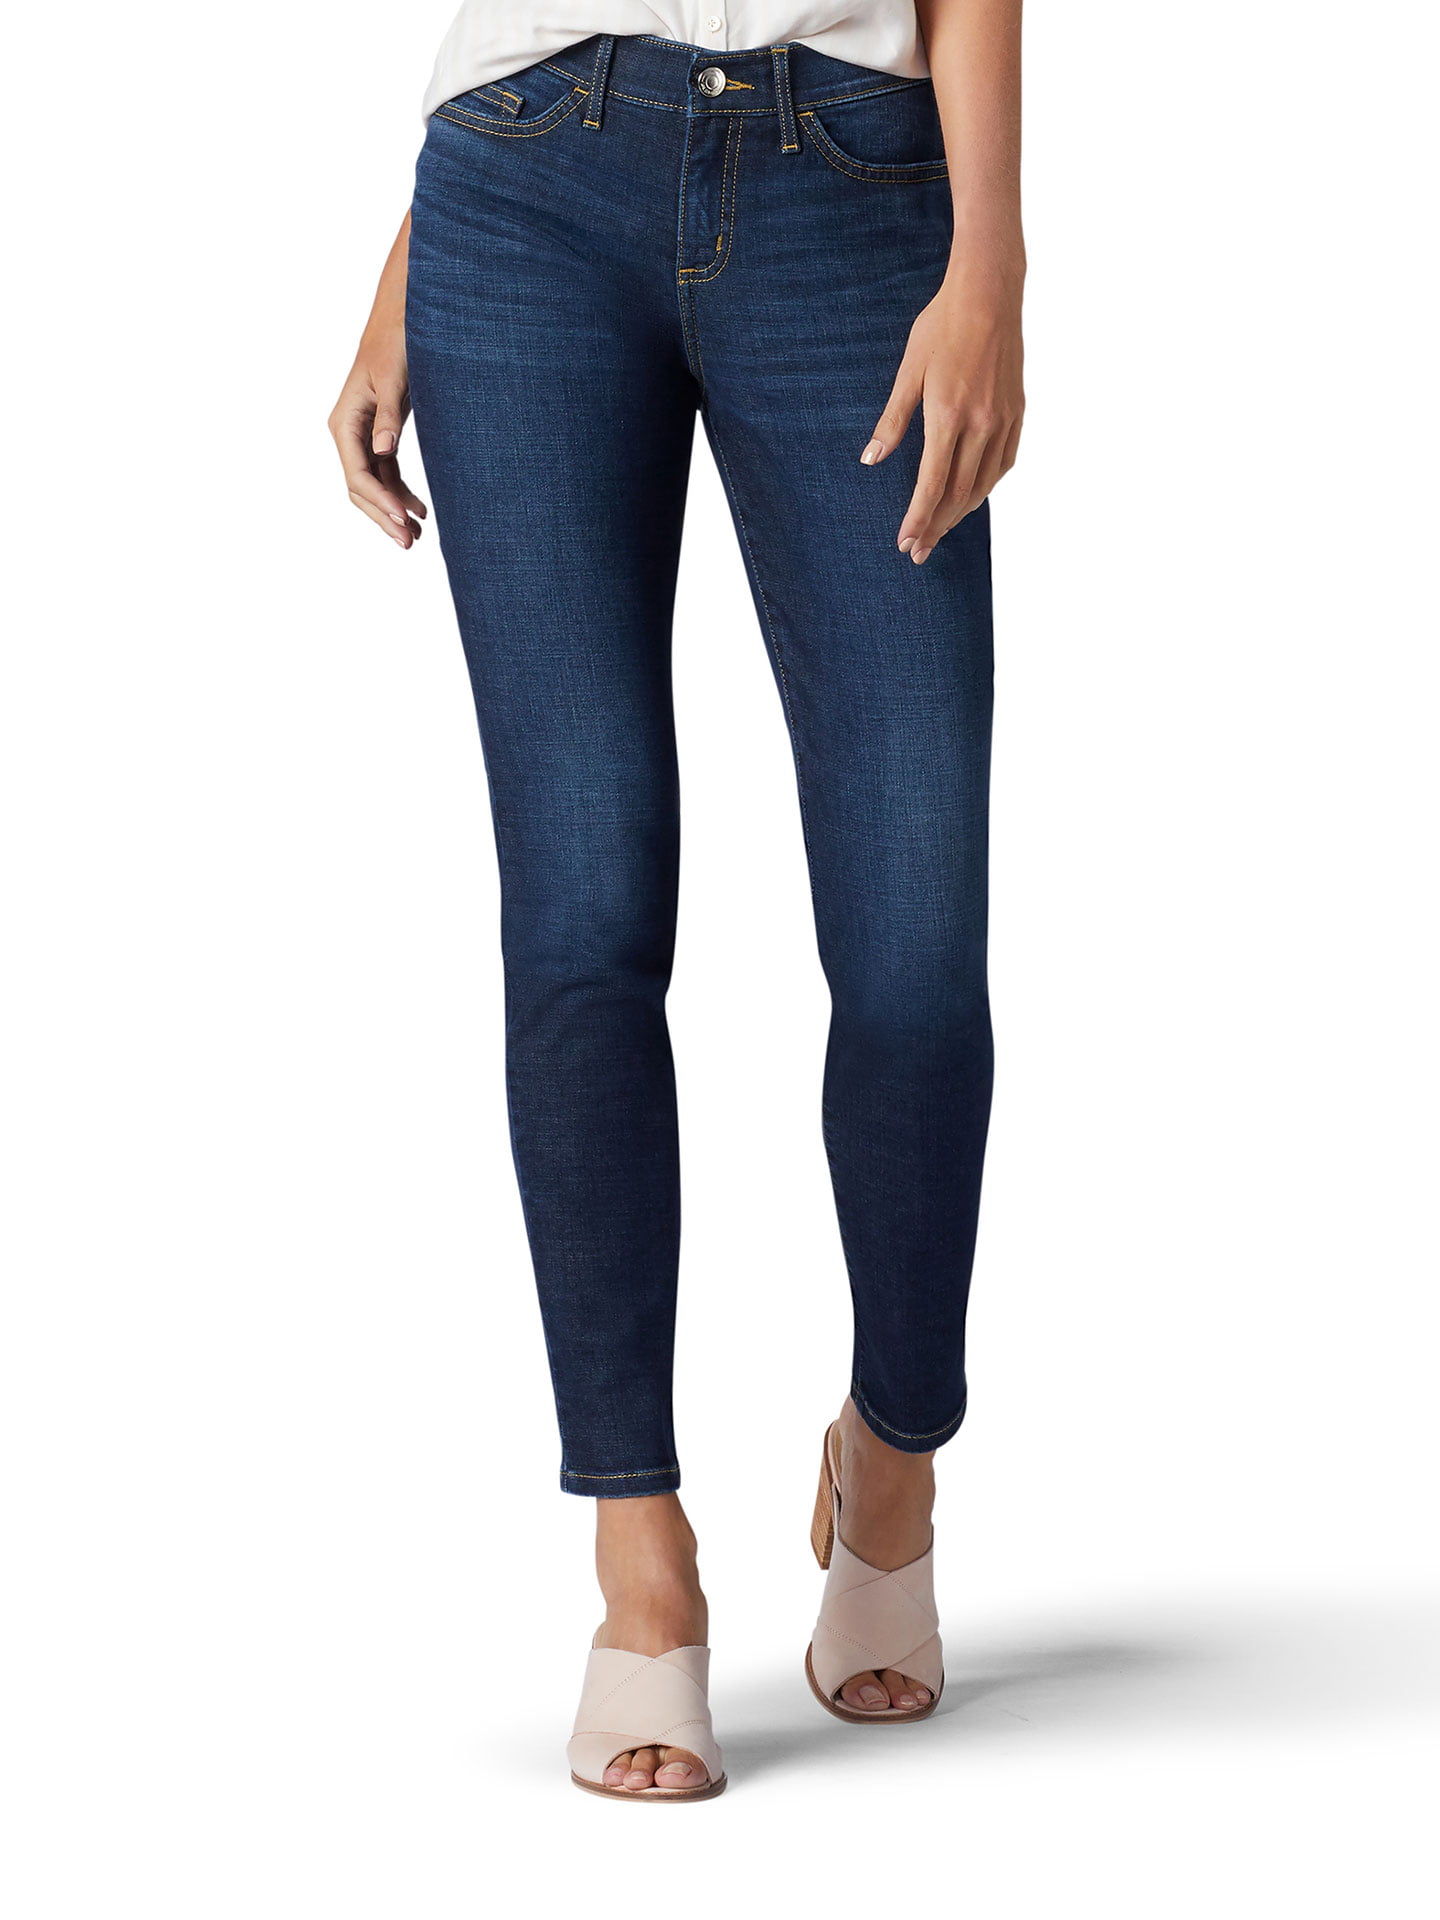 Lee Women's Flex Motion Skinny Leg Jeans, Shipwreck, 10 - Walmart.com